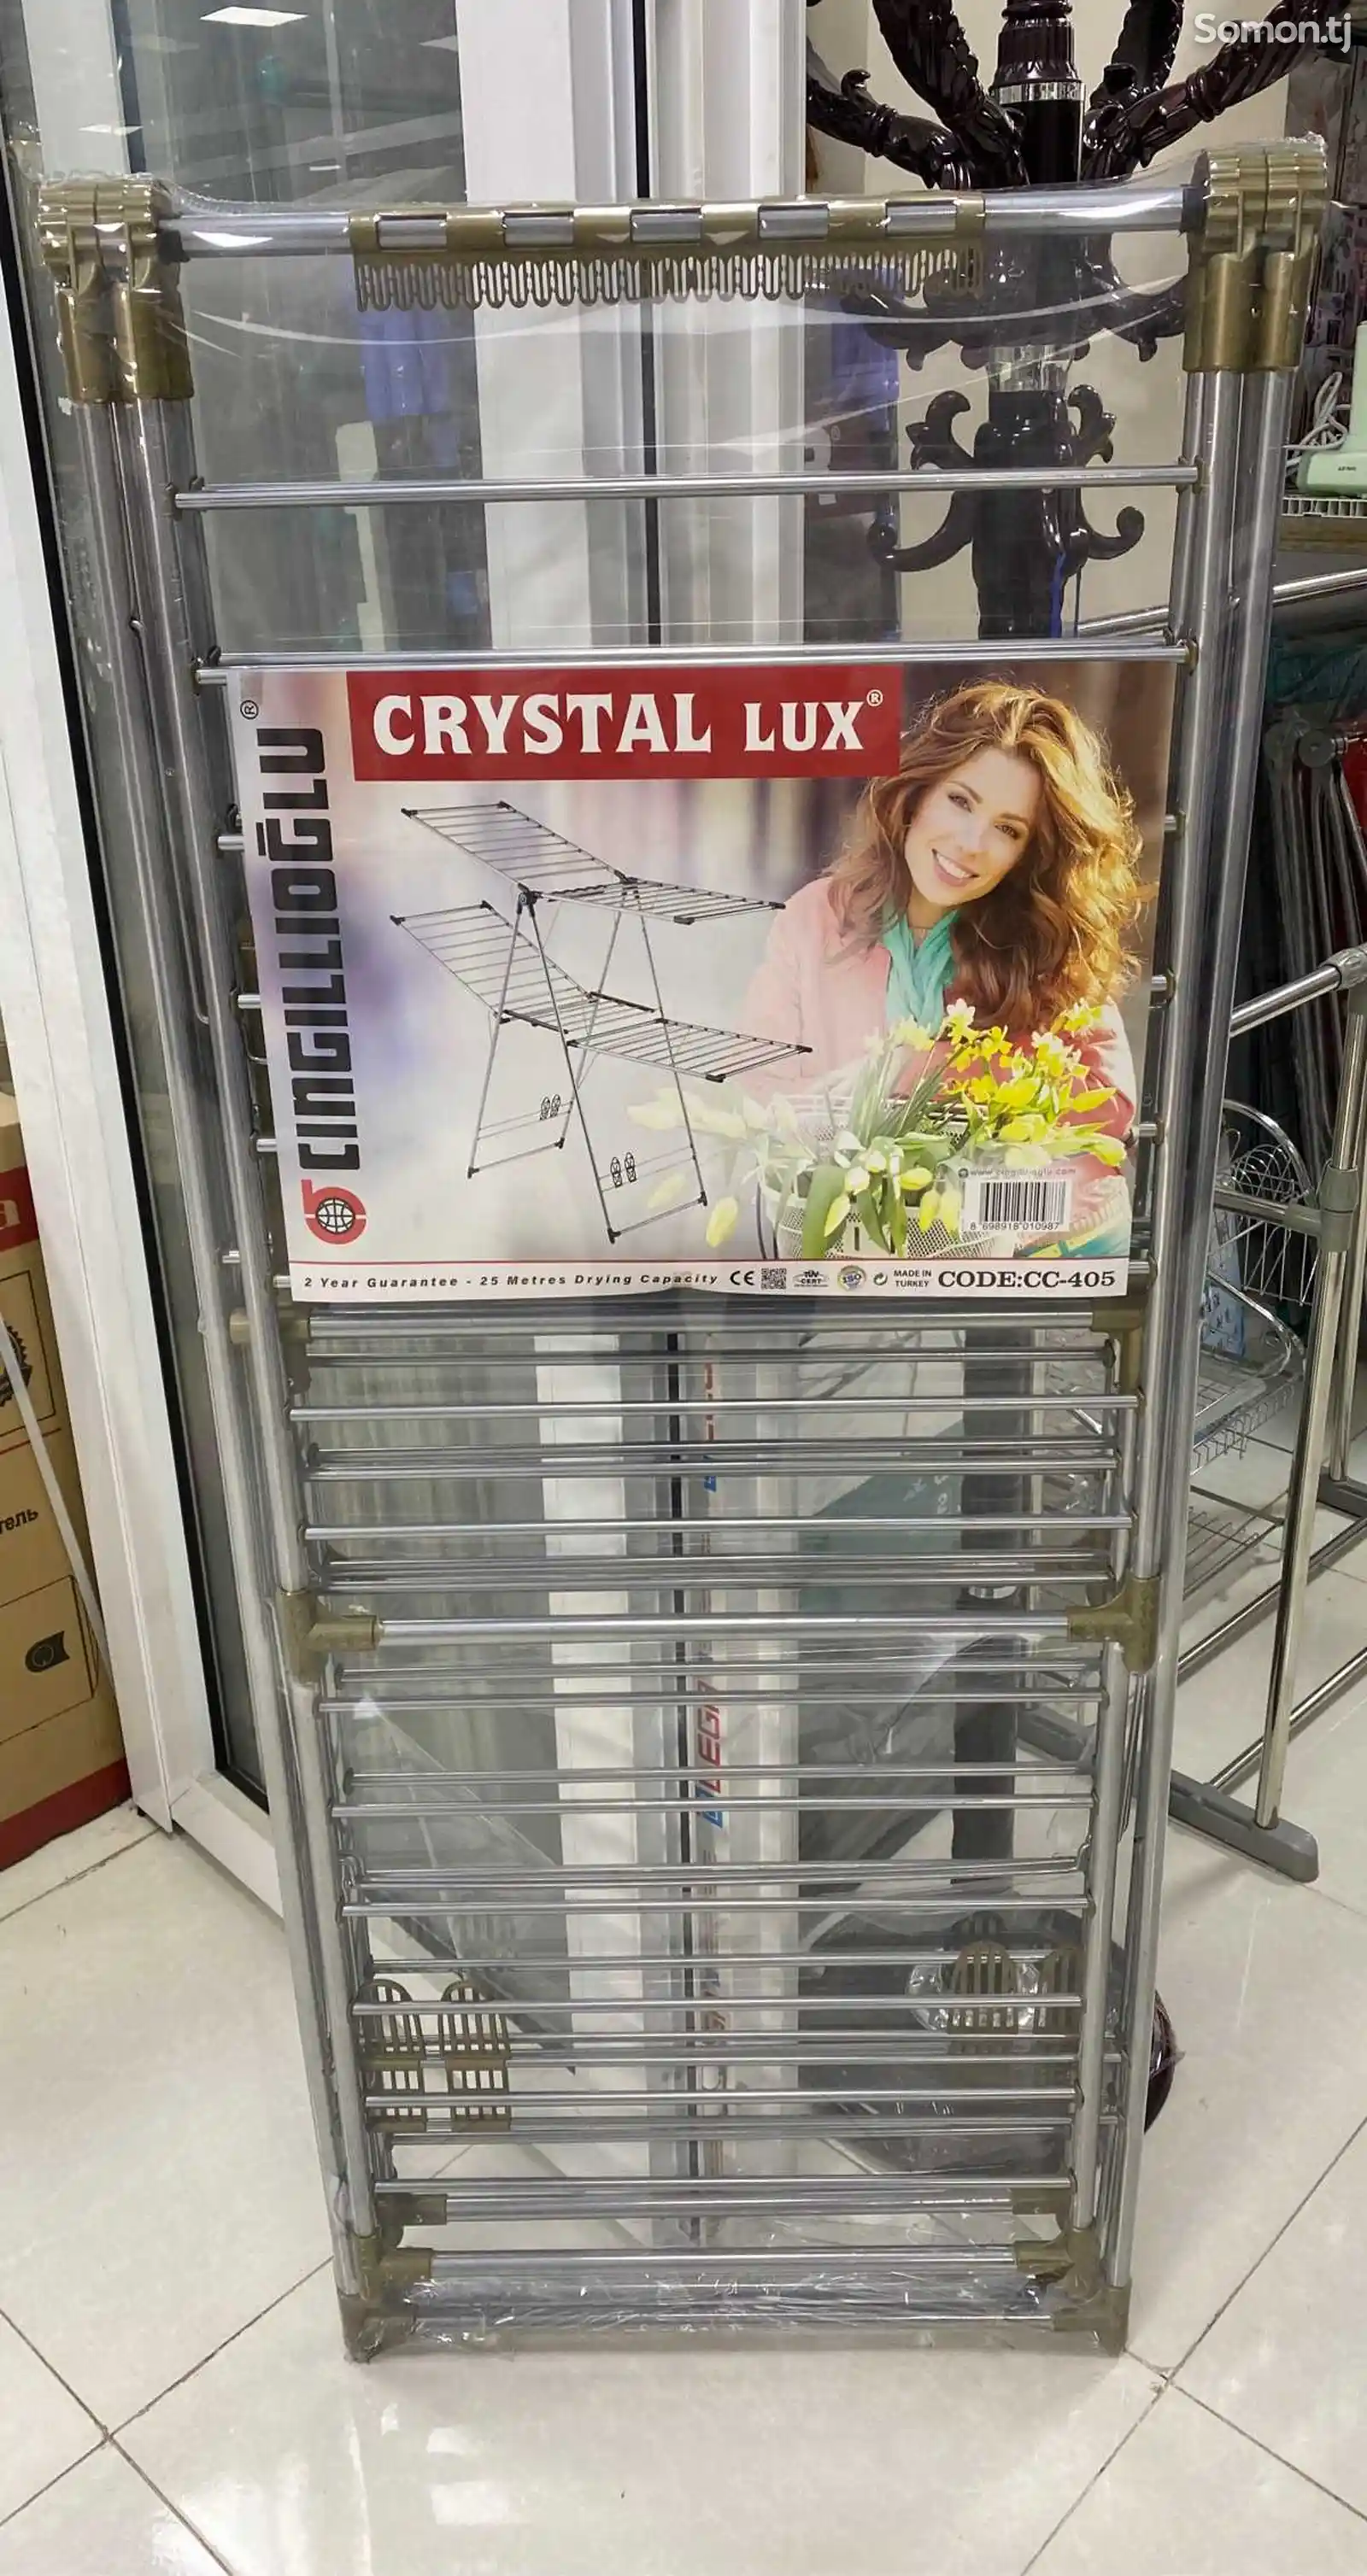 Сушилка Crystal lux 405-1